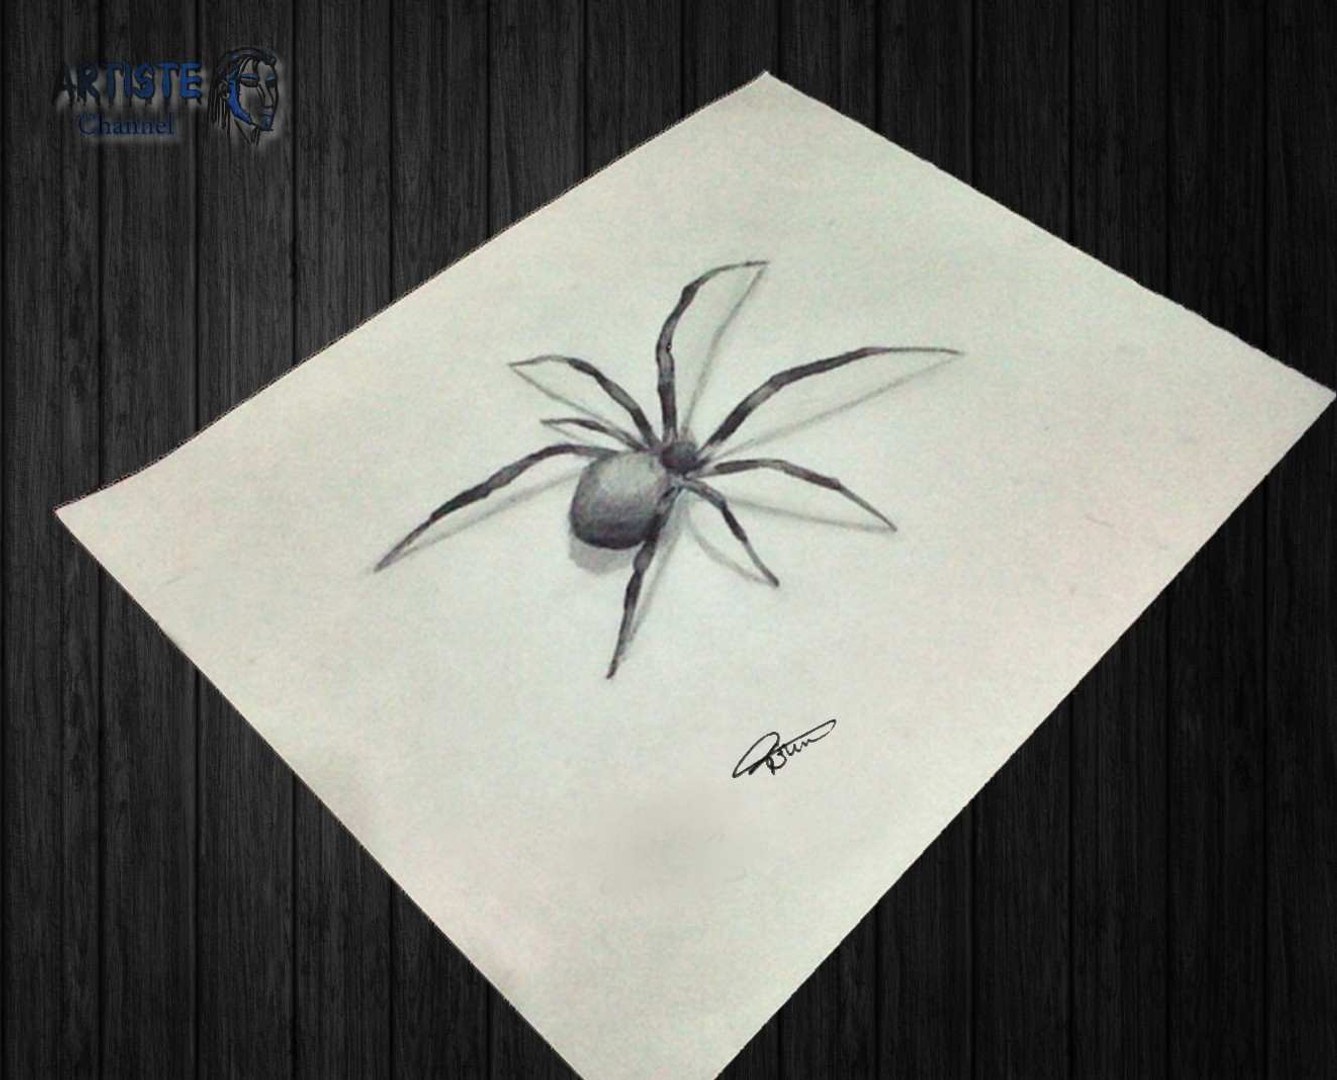 how to drow a spider تعلم رسم عنكبوت ثلاتية الابعاد بطريقة